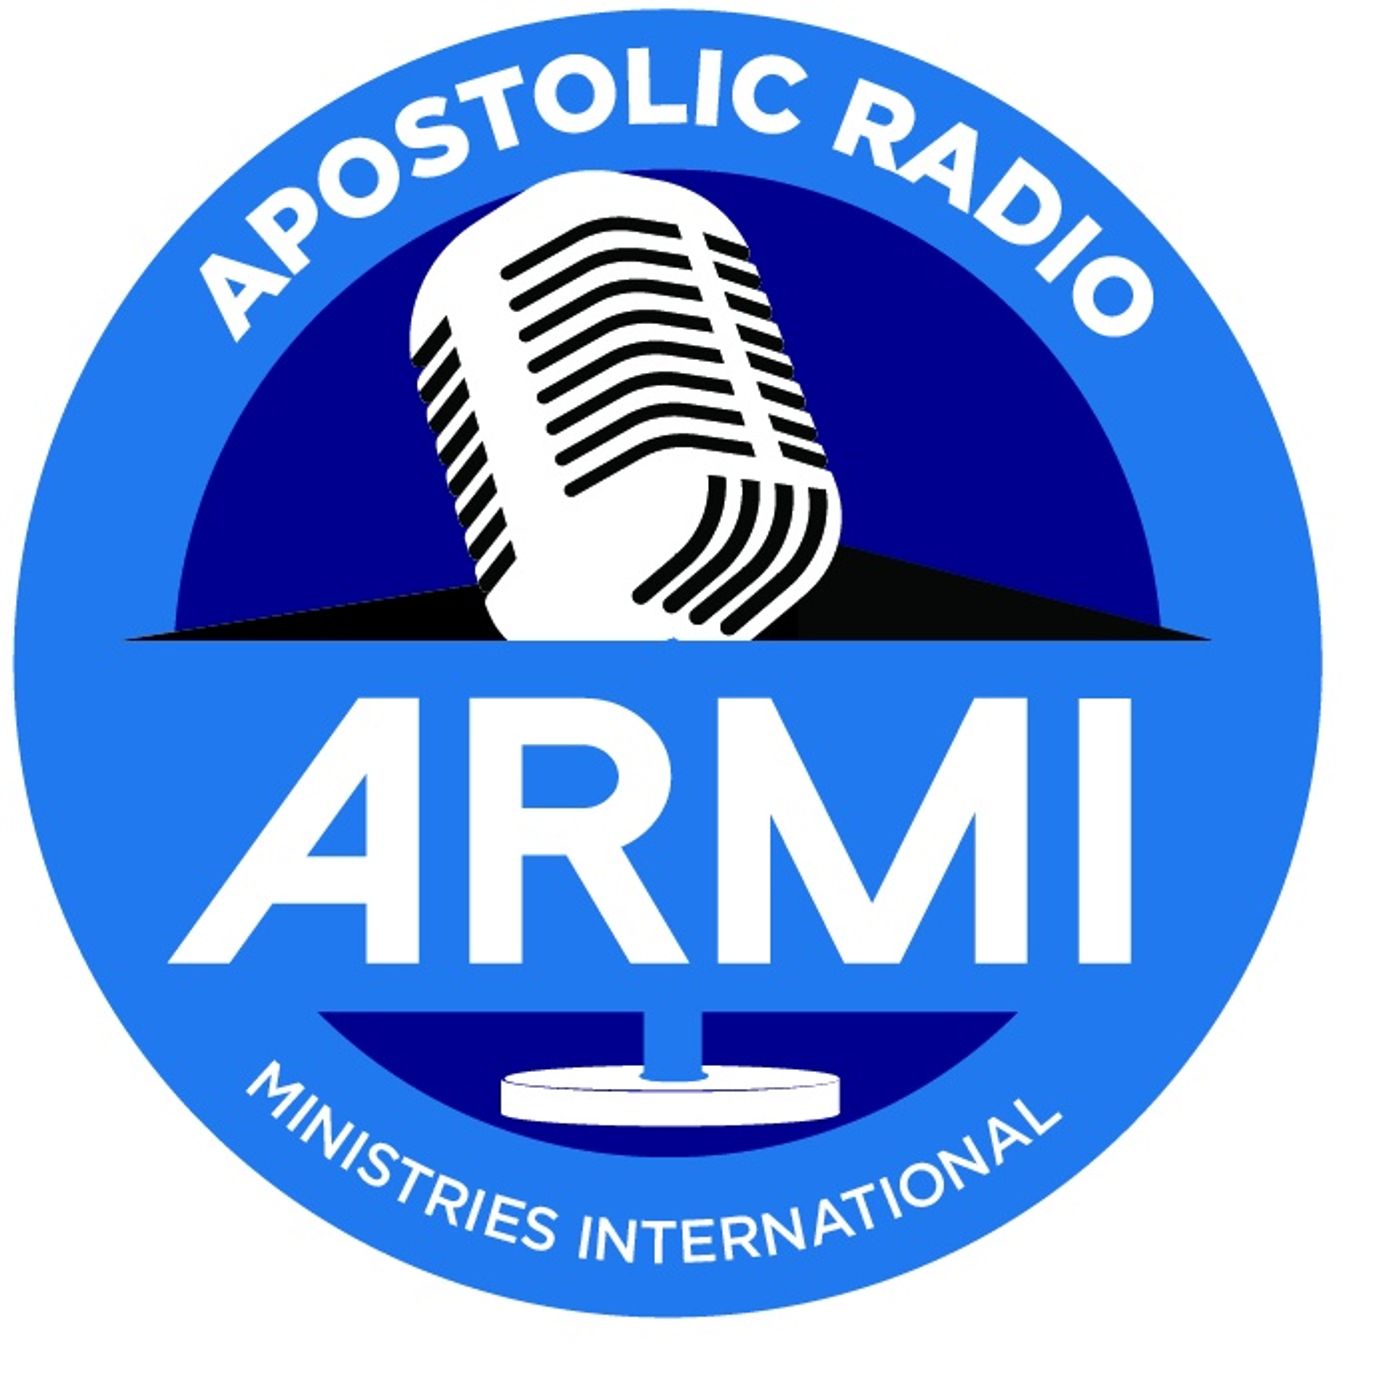 Apostolic Radio Ministries Int